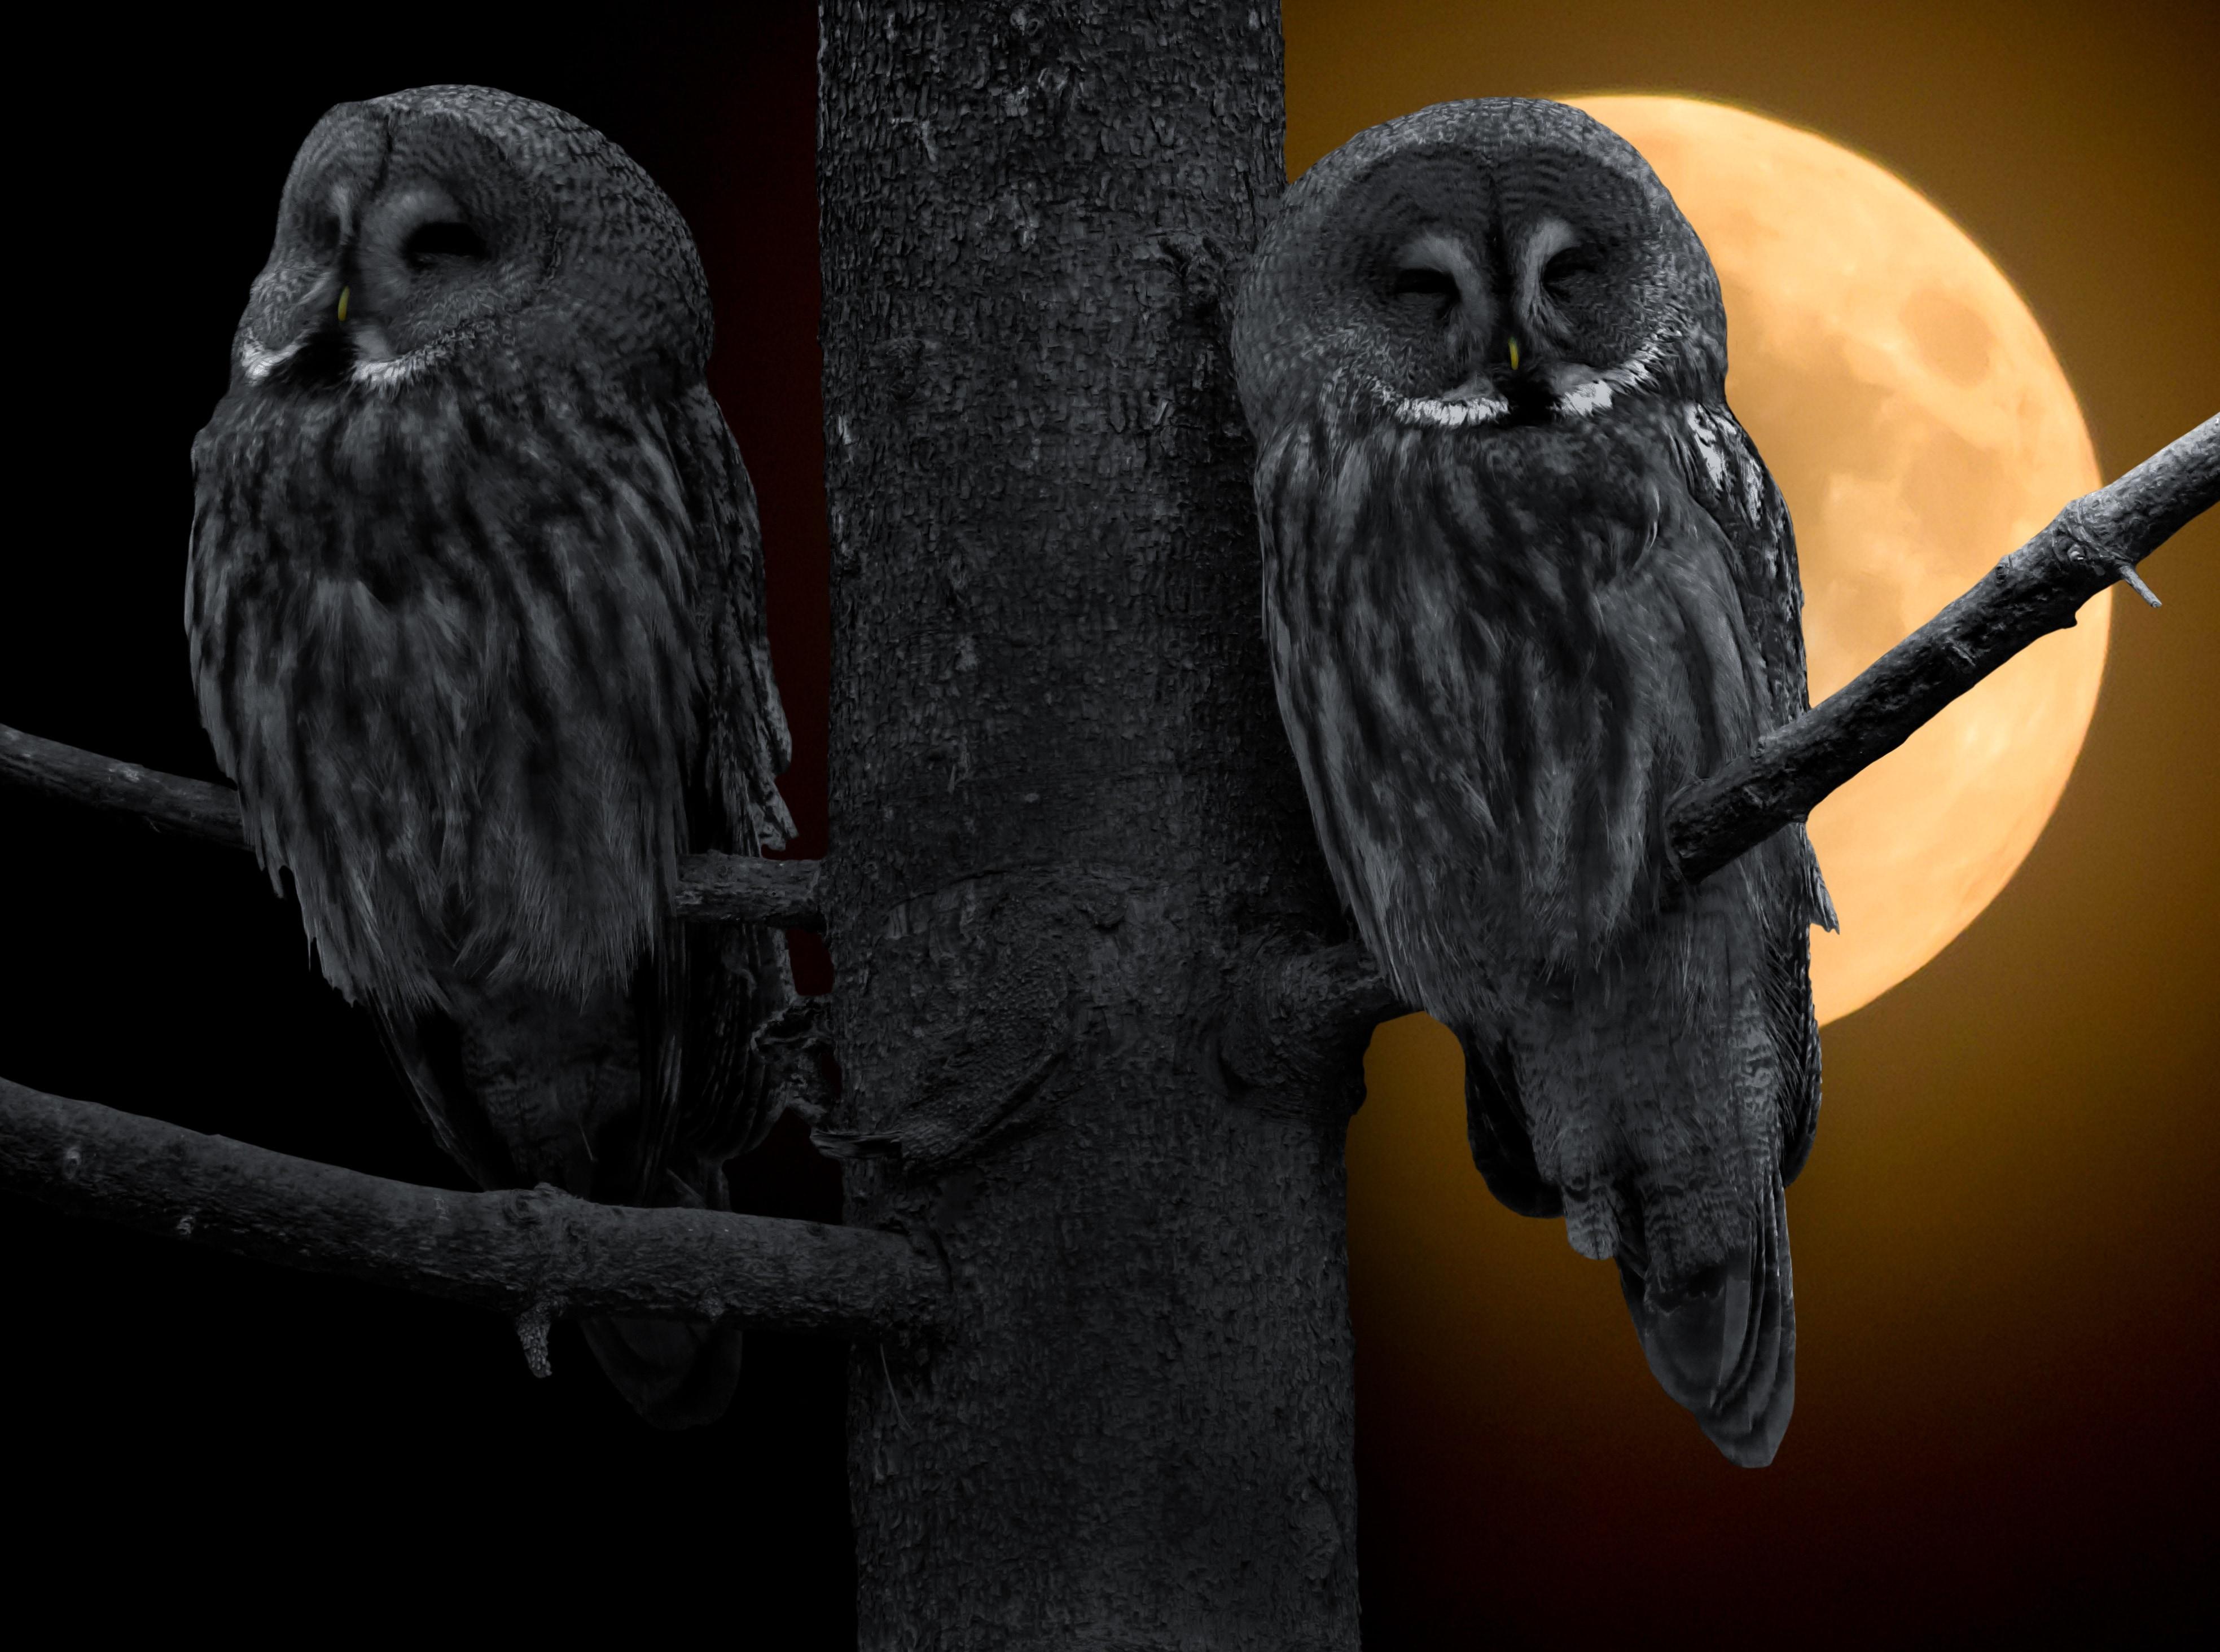 Dark Owl Wallpapers HD free download 7.